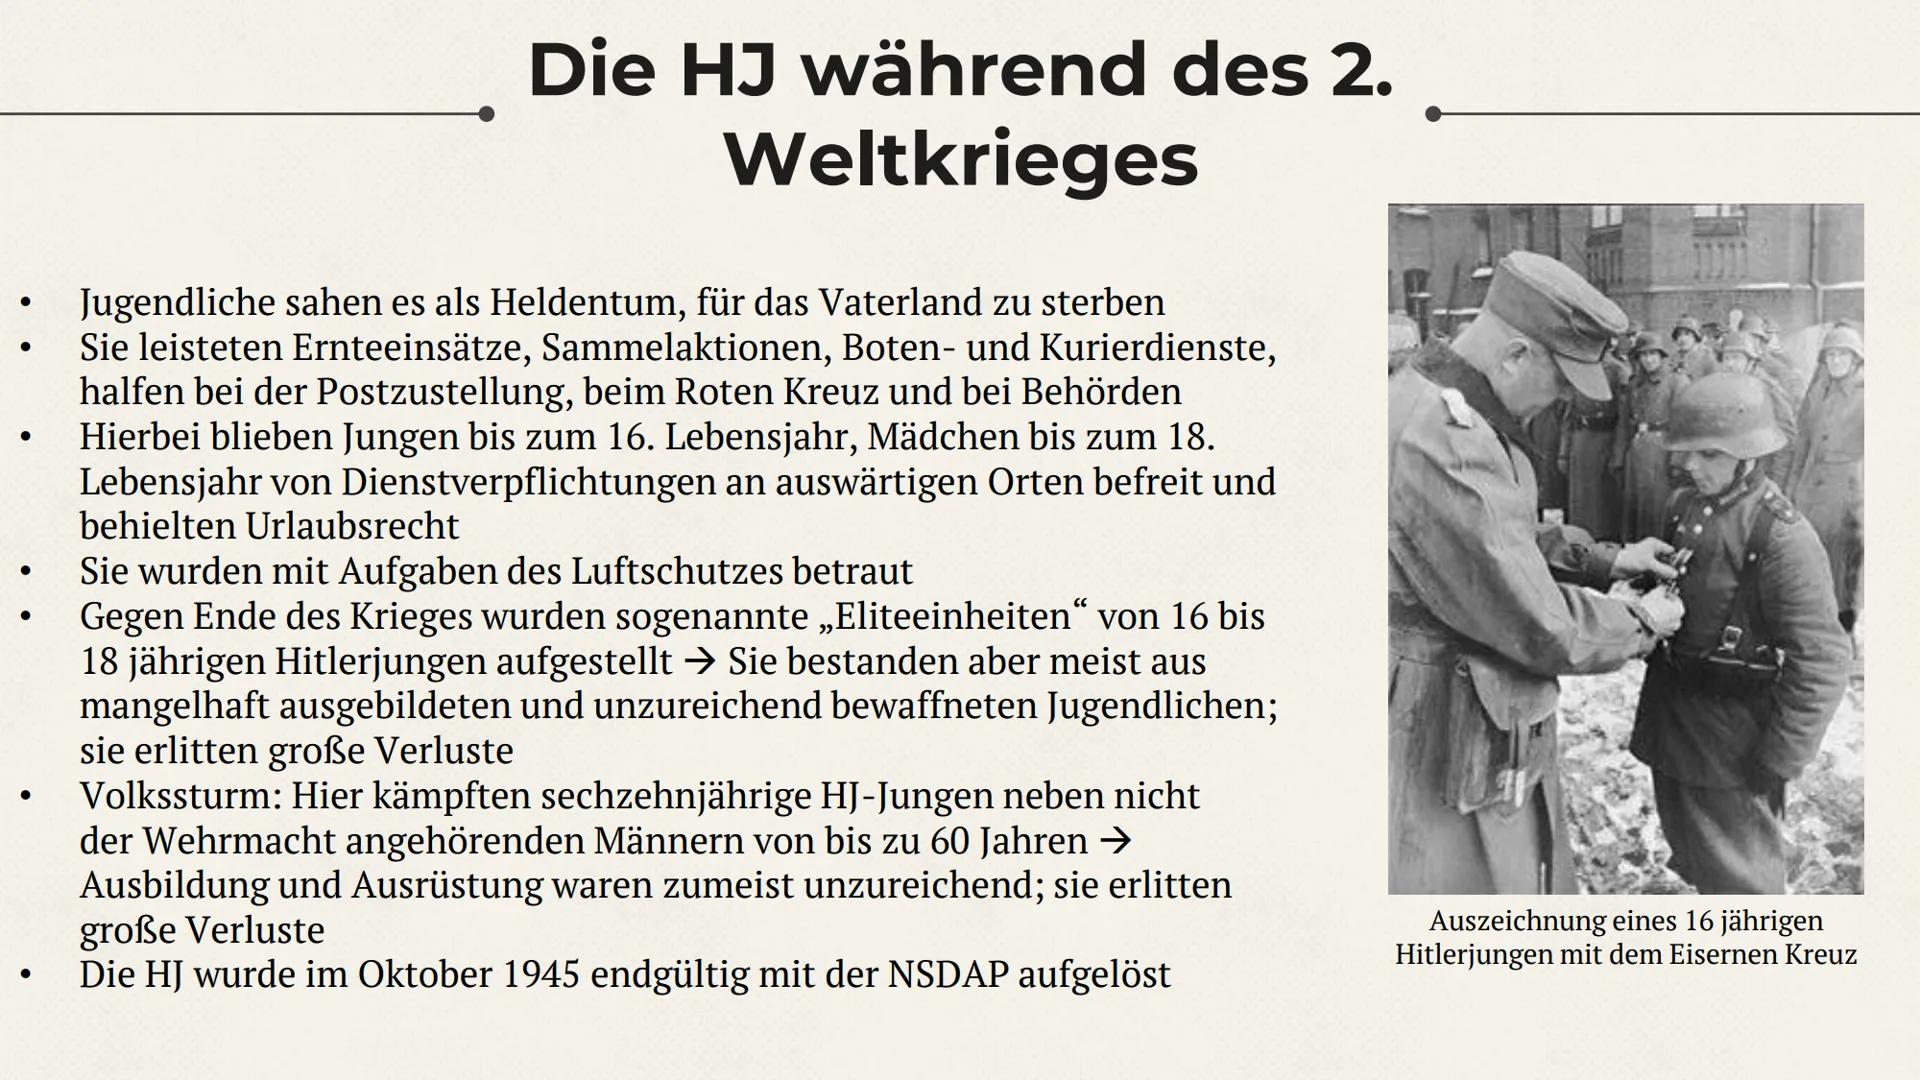 Die Hitlerjugend (HJ) Inhalt
1. Vorläufer
2. Entwicklung bis 1933
3. Die Hitlerjugend als Staatsjugend 1933 bis 1939
4. Was machte die HJ so